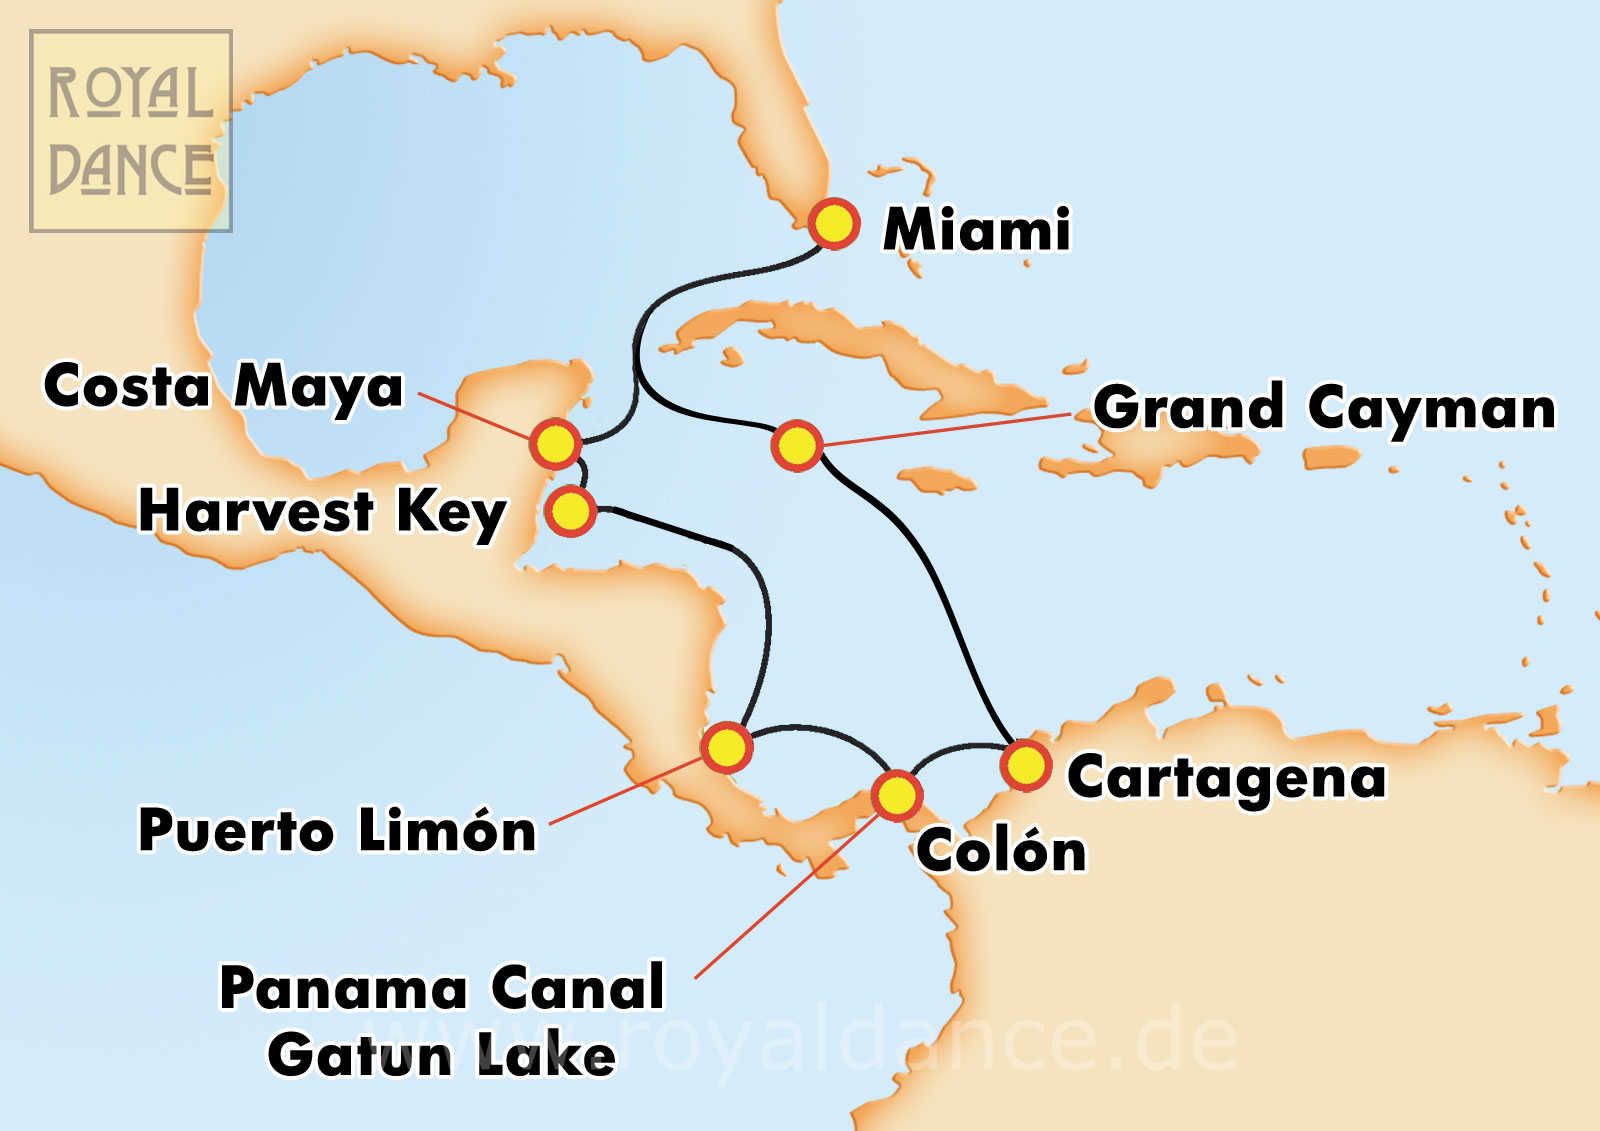 Route Tanzkreuzfahrt Miami, Karibik und Panamakanal